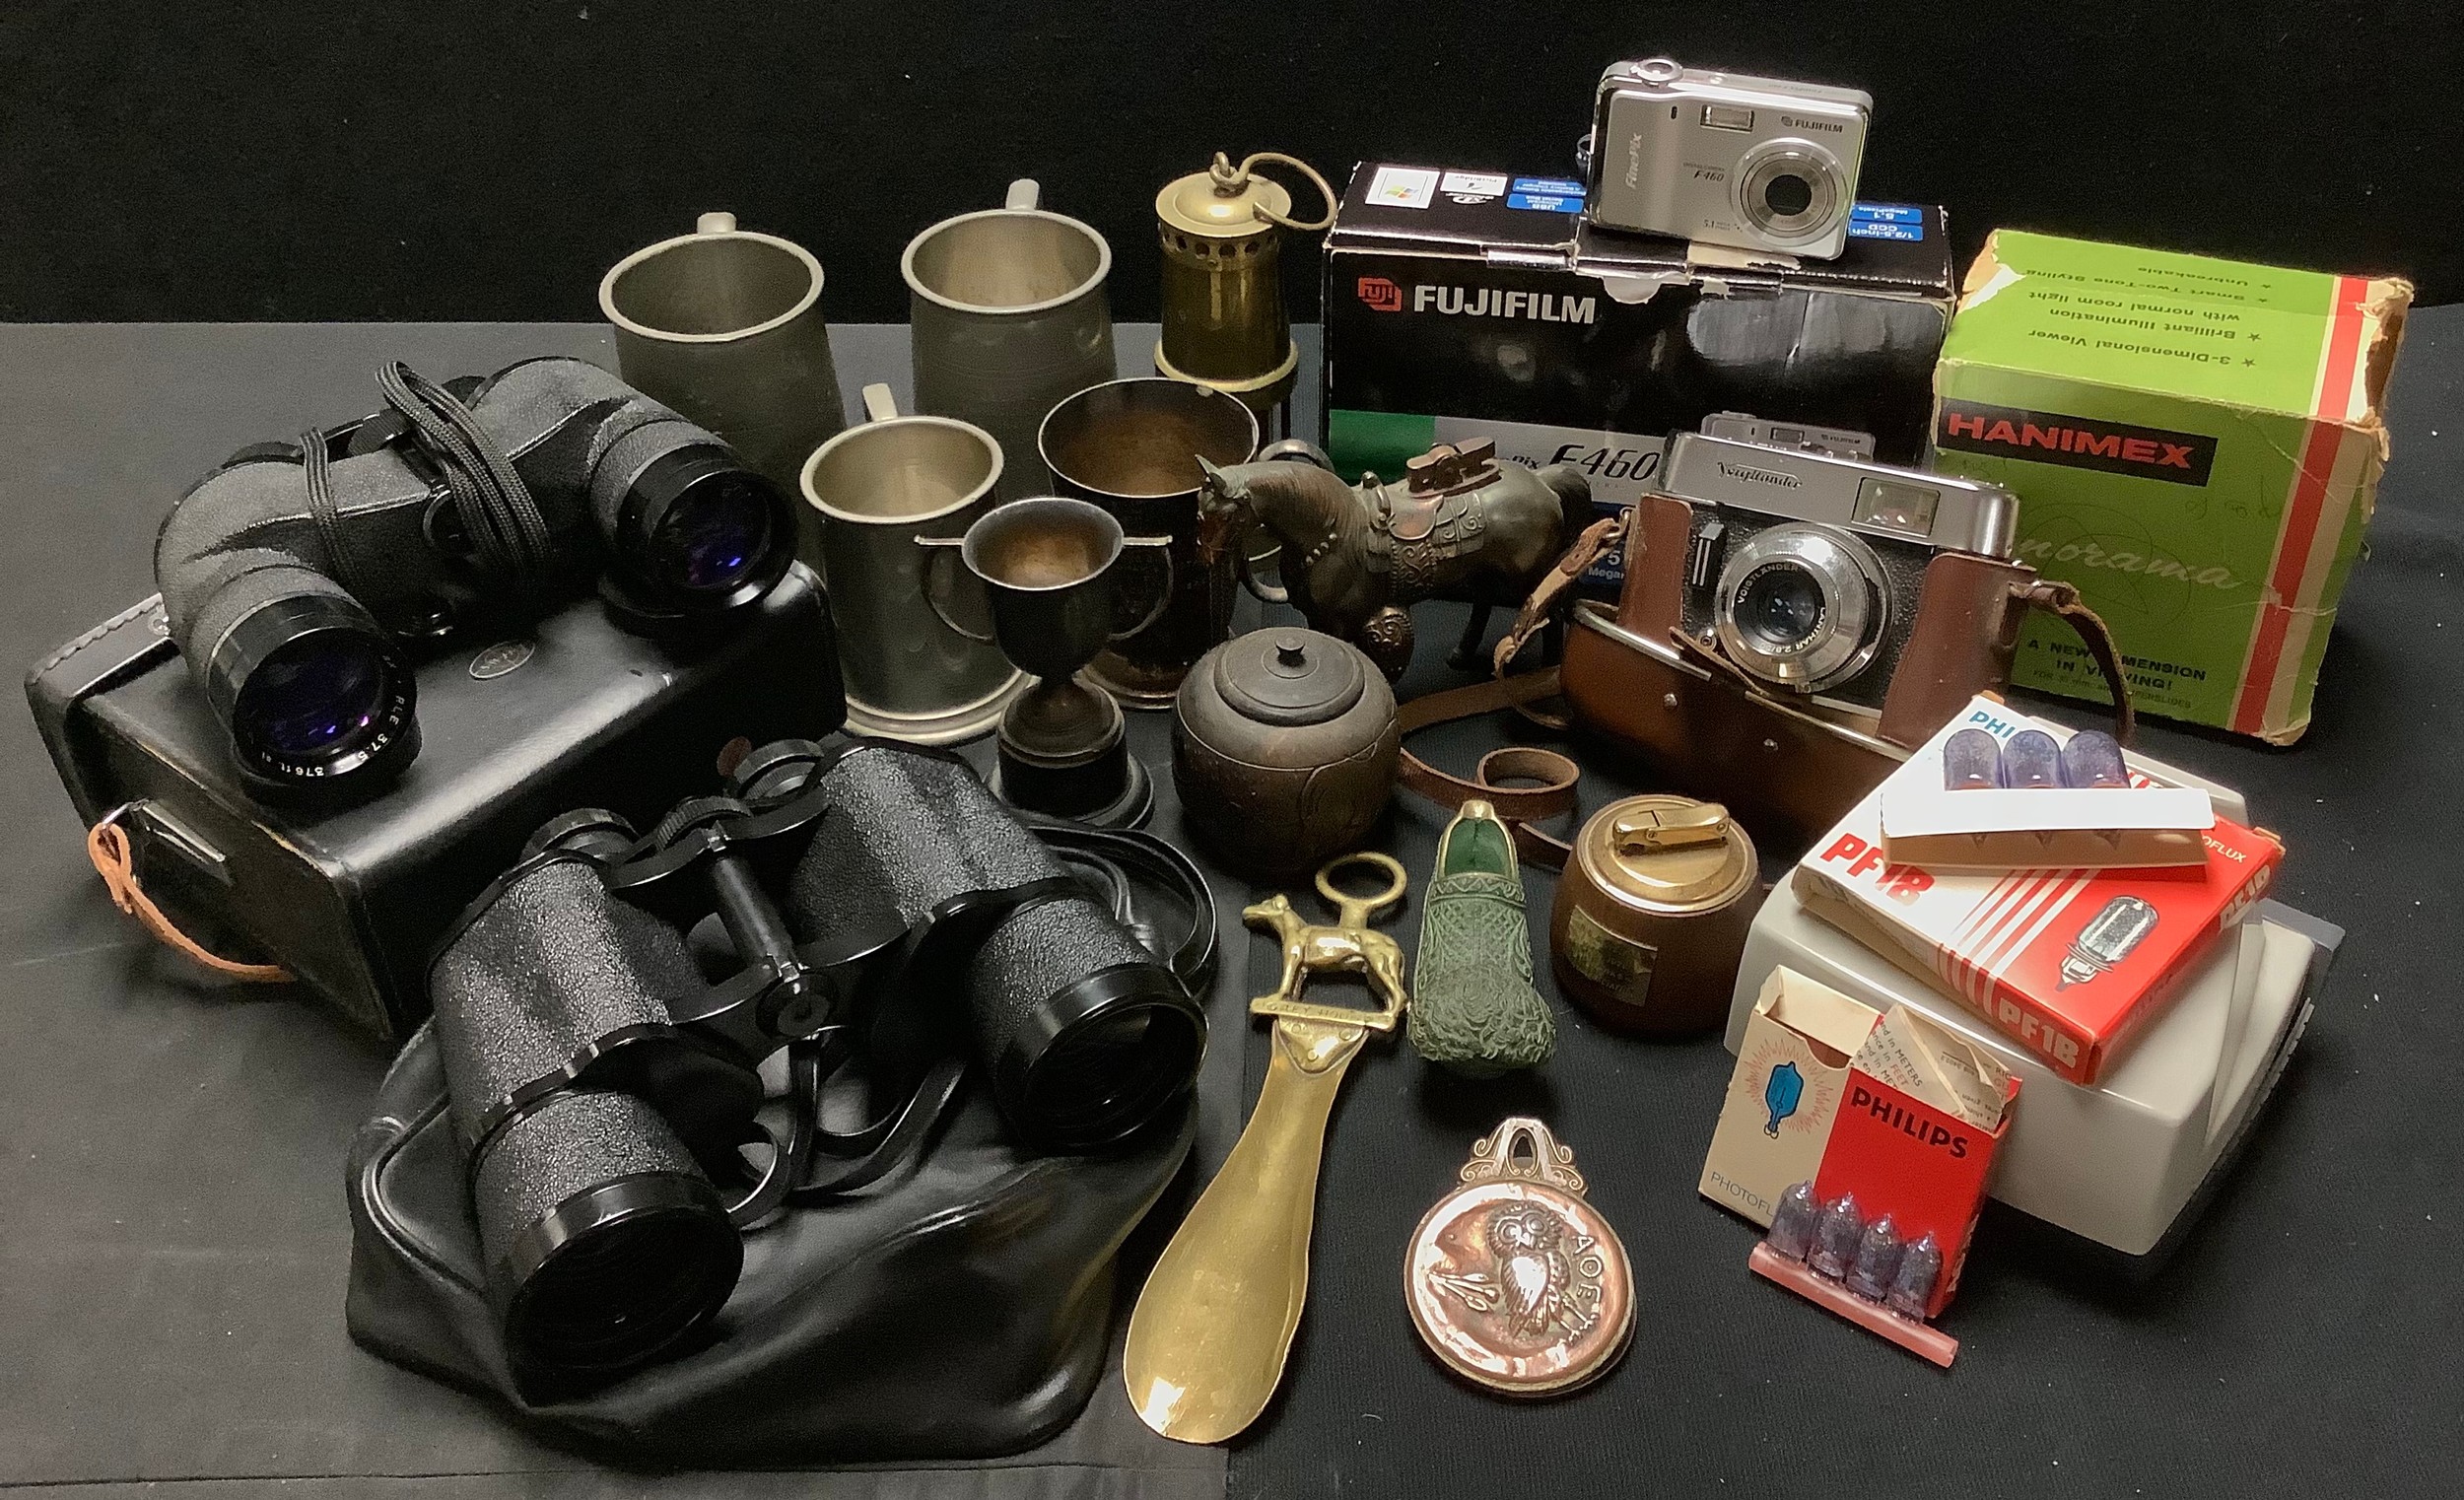 Boxes and Objects - a Voigtlander camera; Tasco binoculars; Swift binoculars; pewter mugs; a